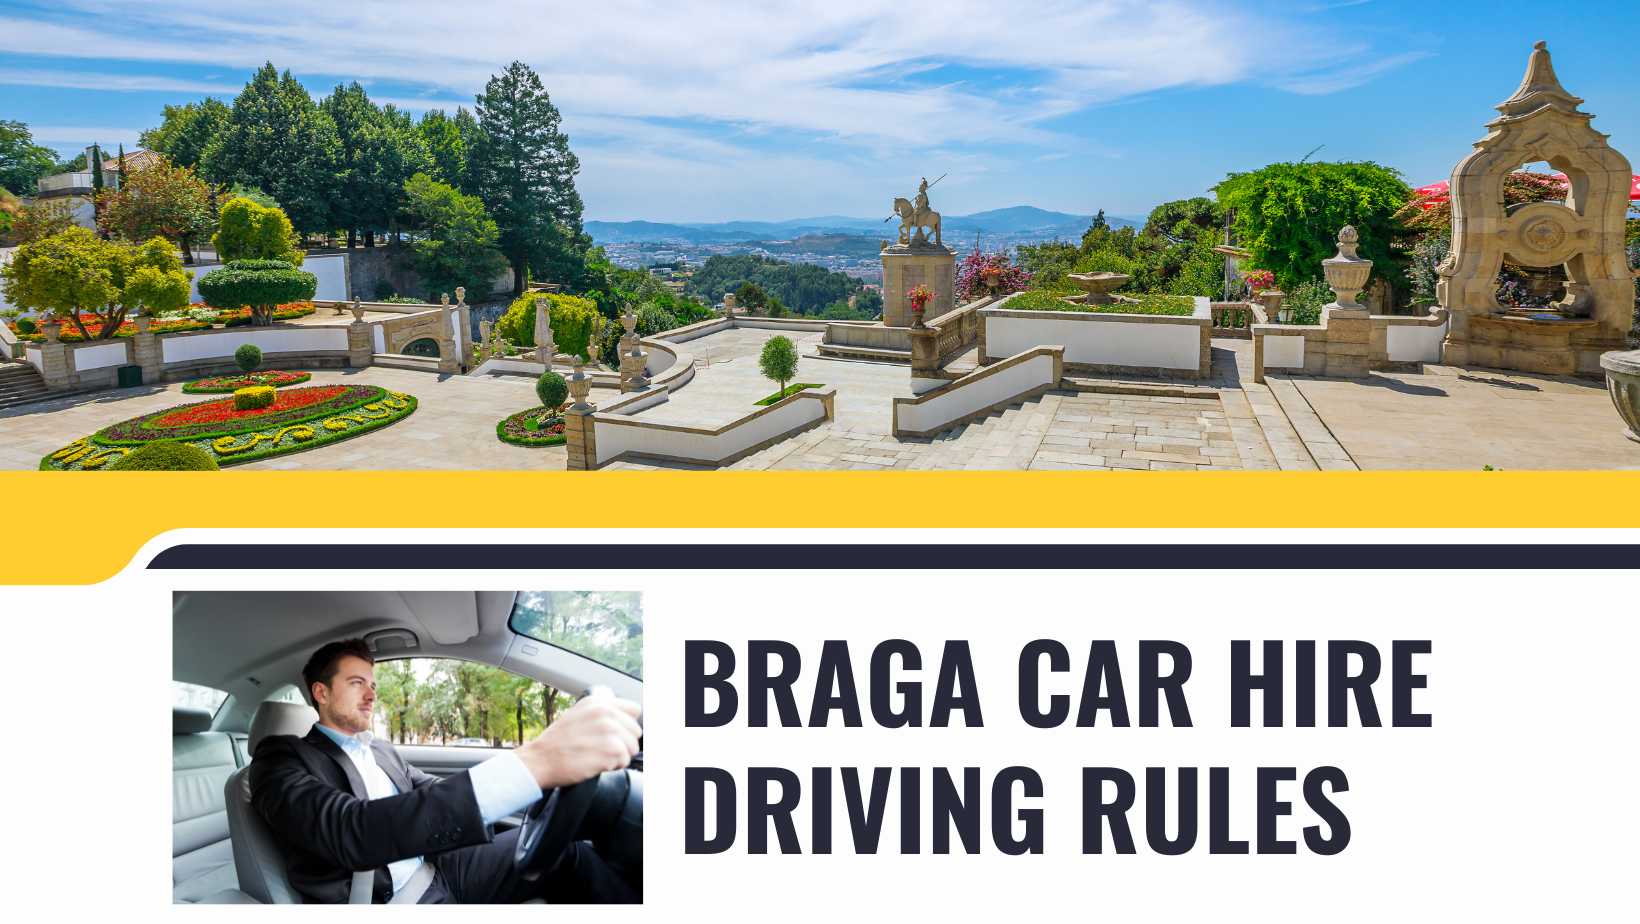 Braga car hire driving rules